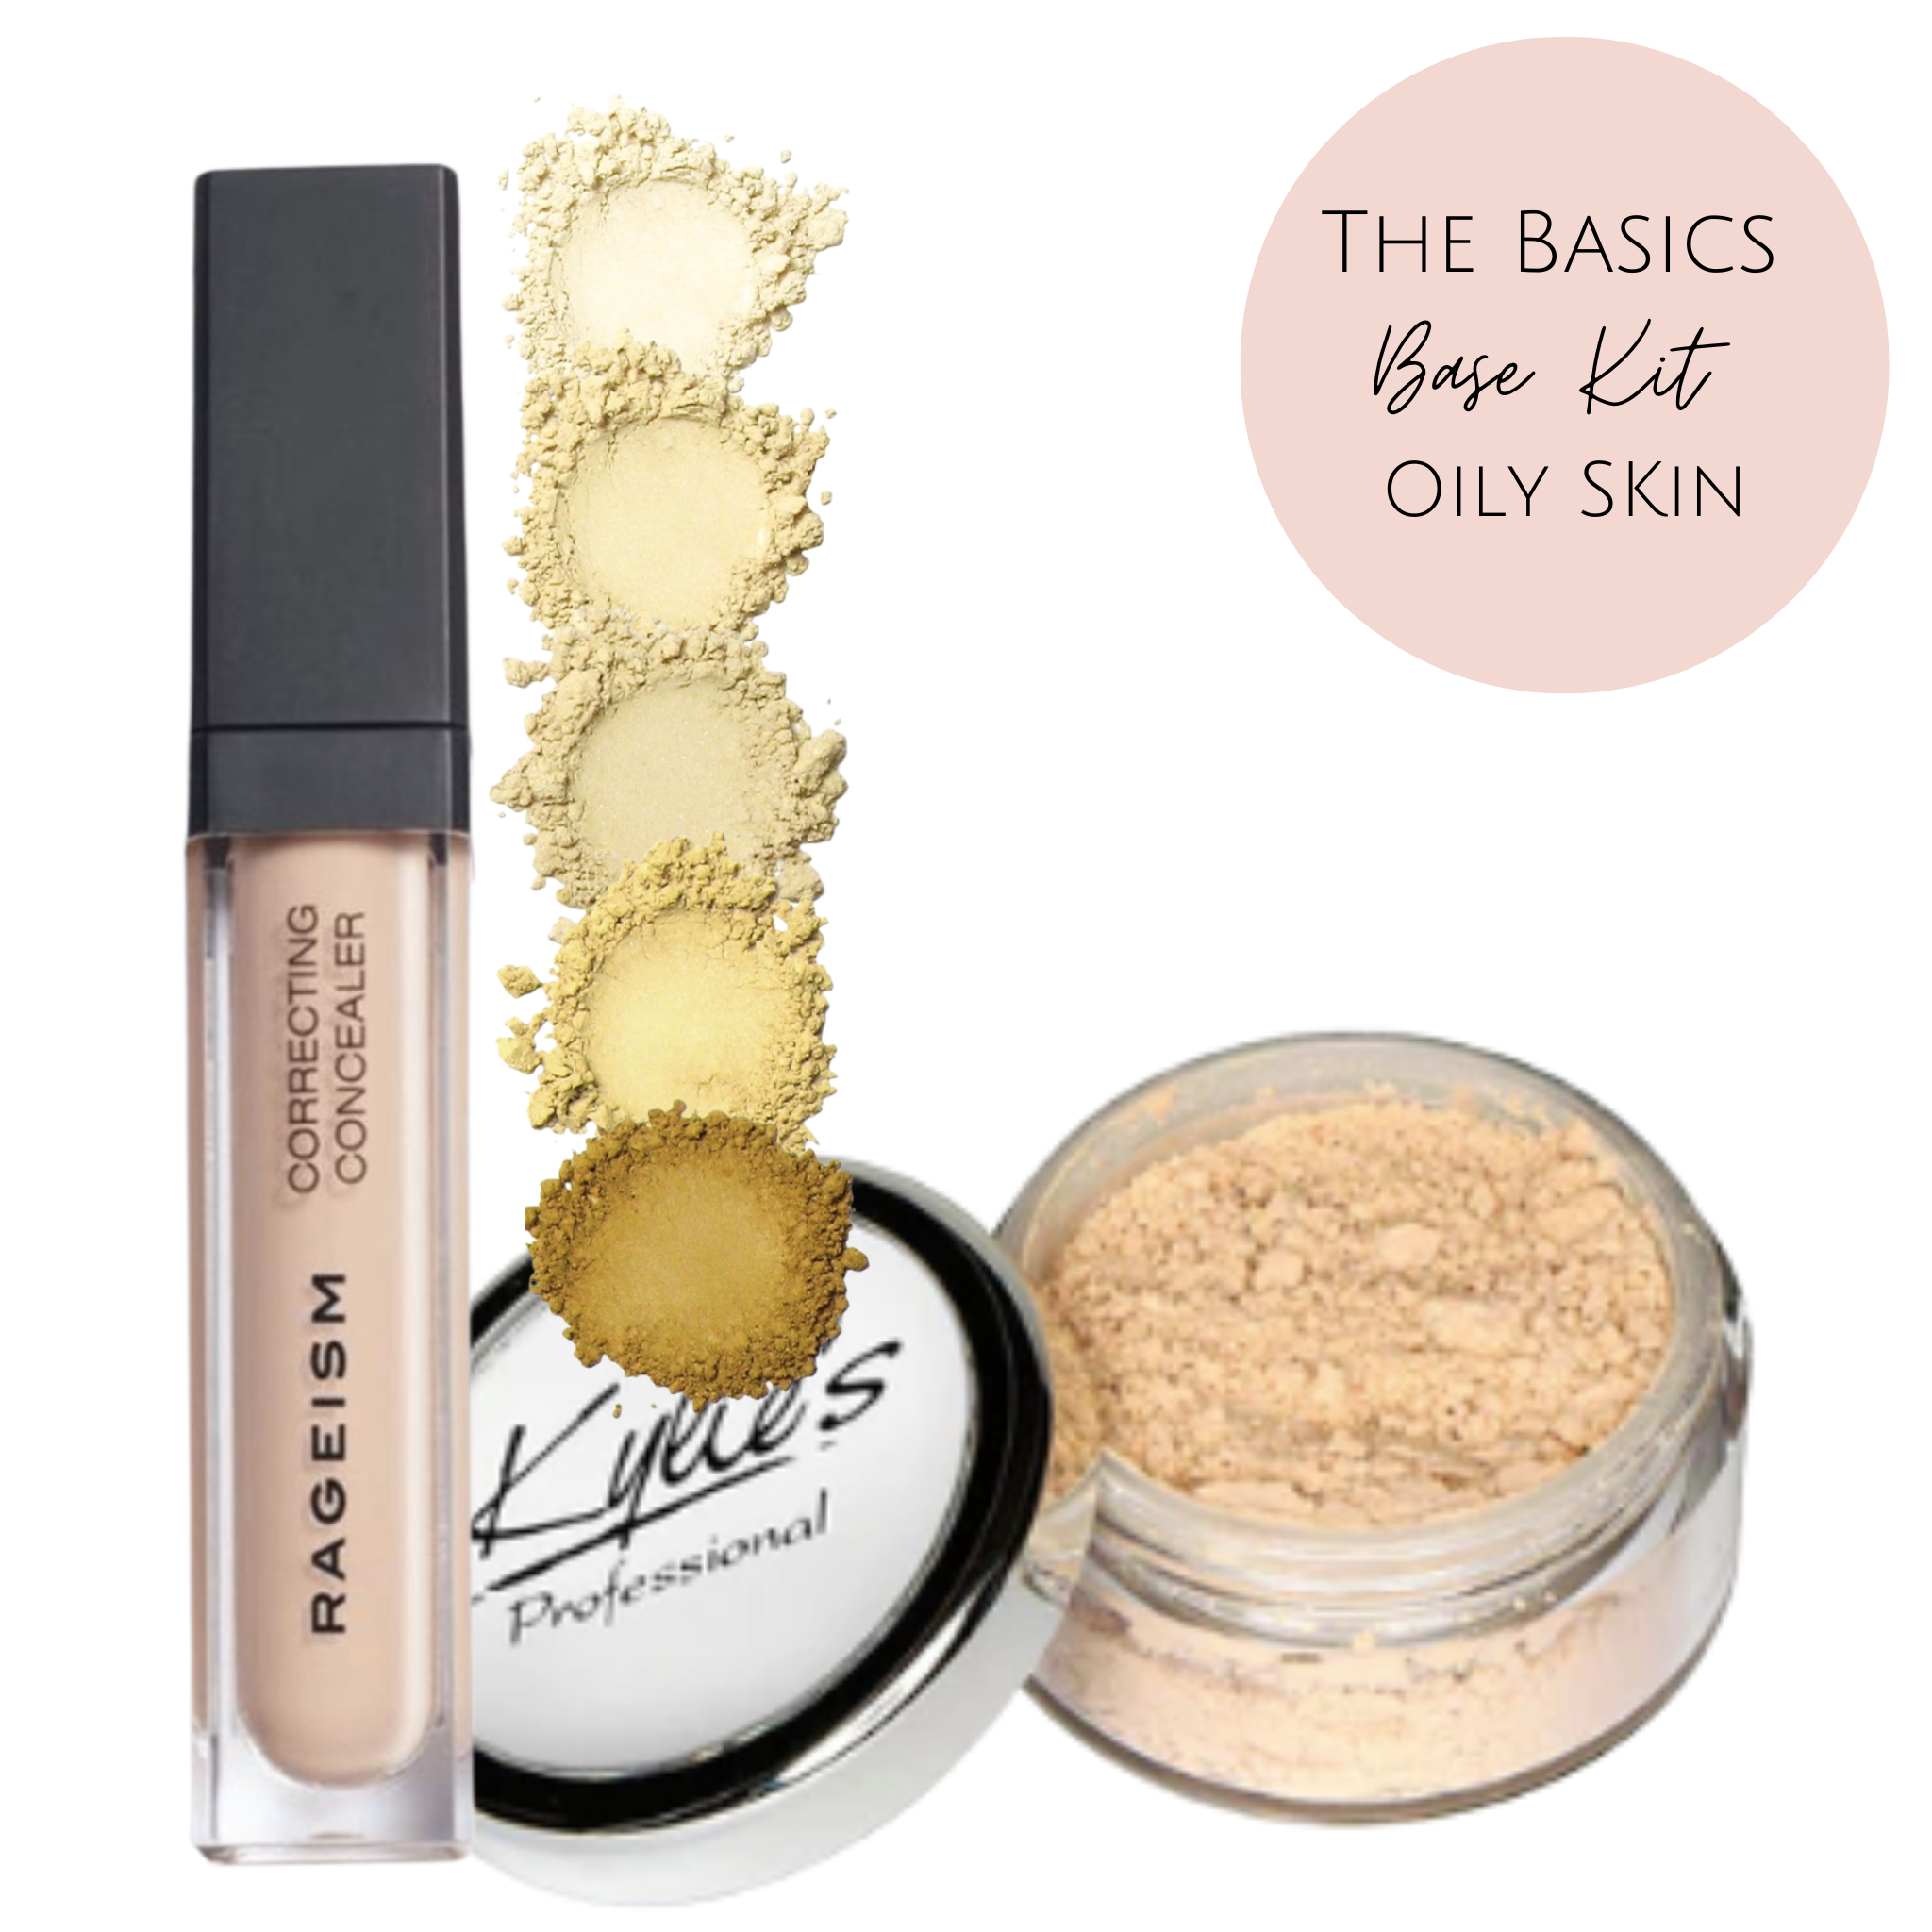 The Basics Base Kit - Oily Skin